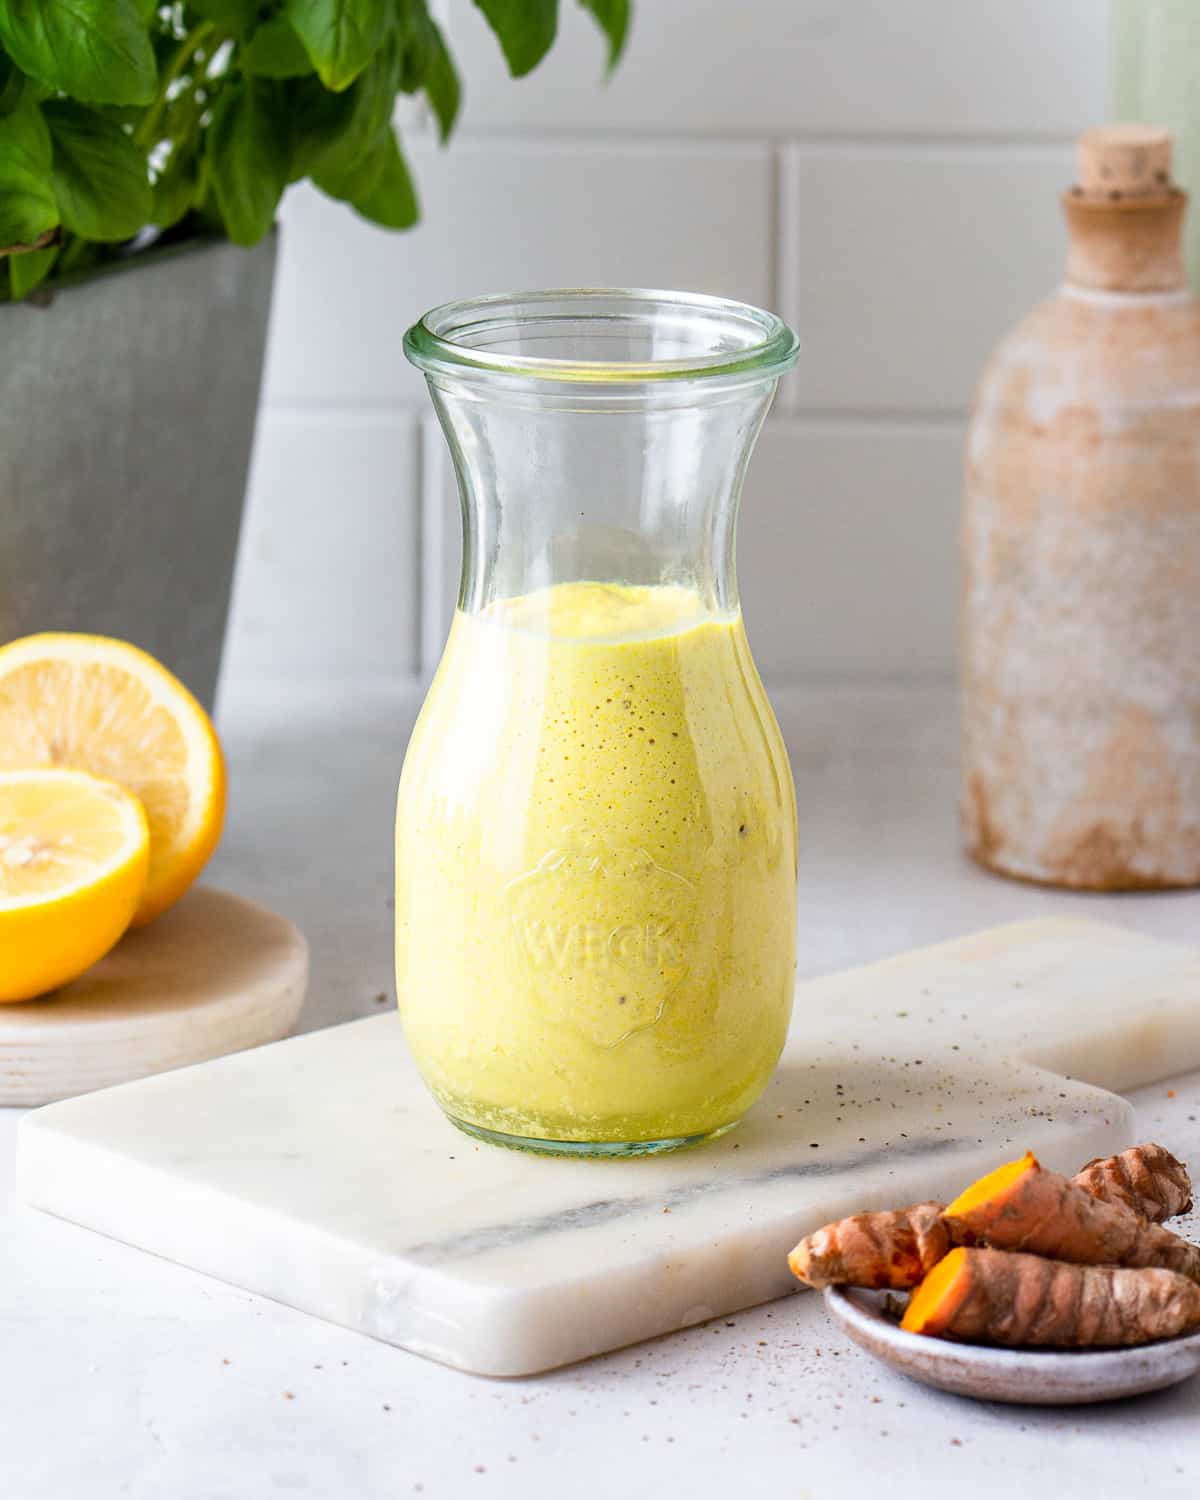 Bright yellow turmeric salad dressing in a glass jar.